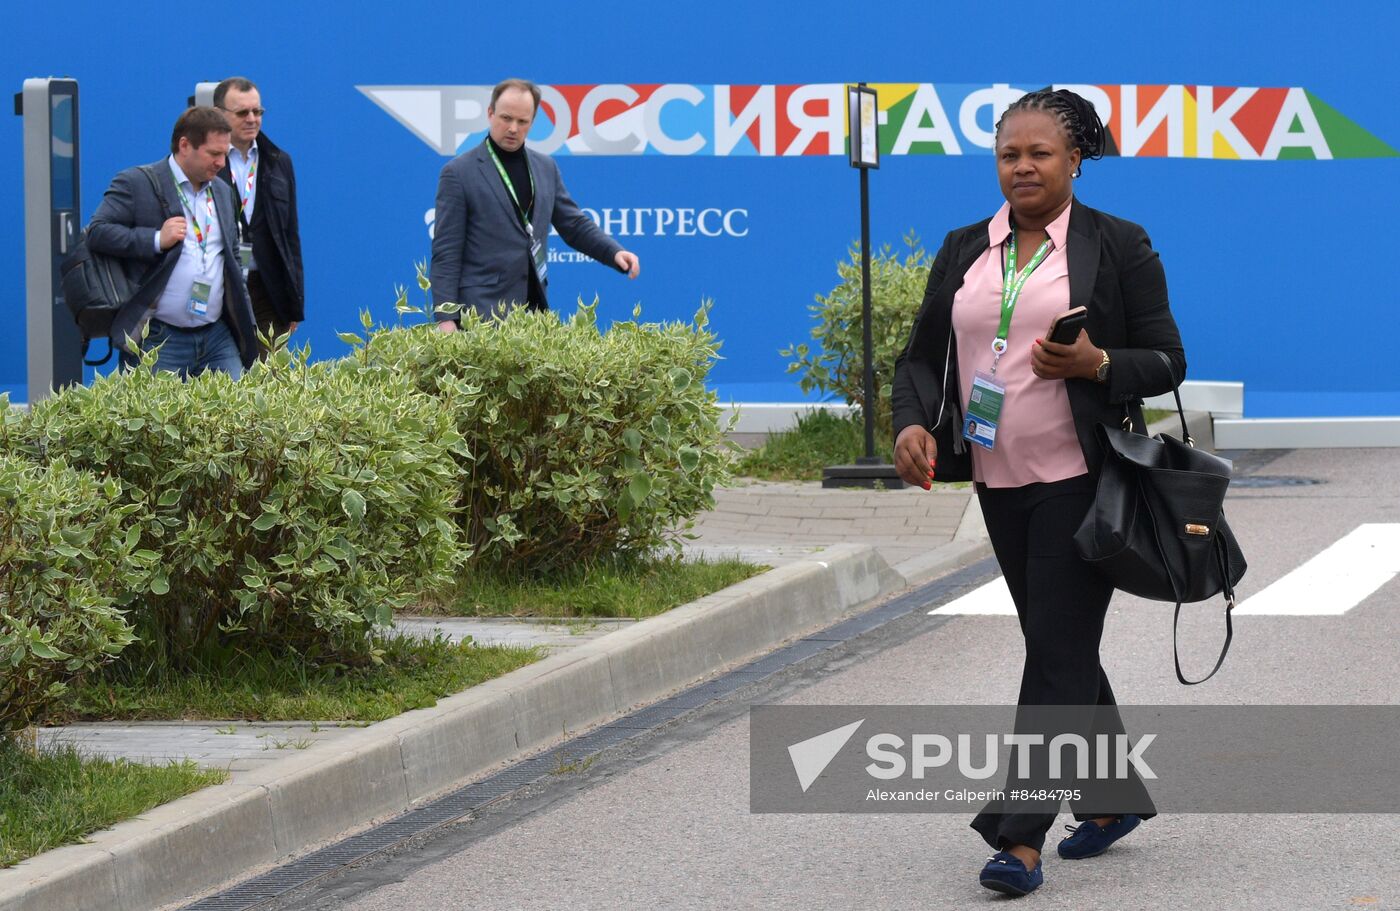 Russia Africa Summit Preparations